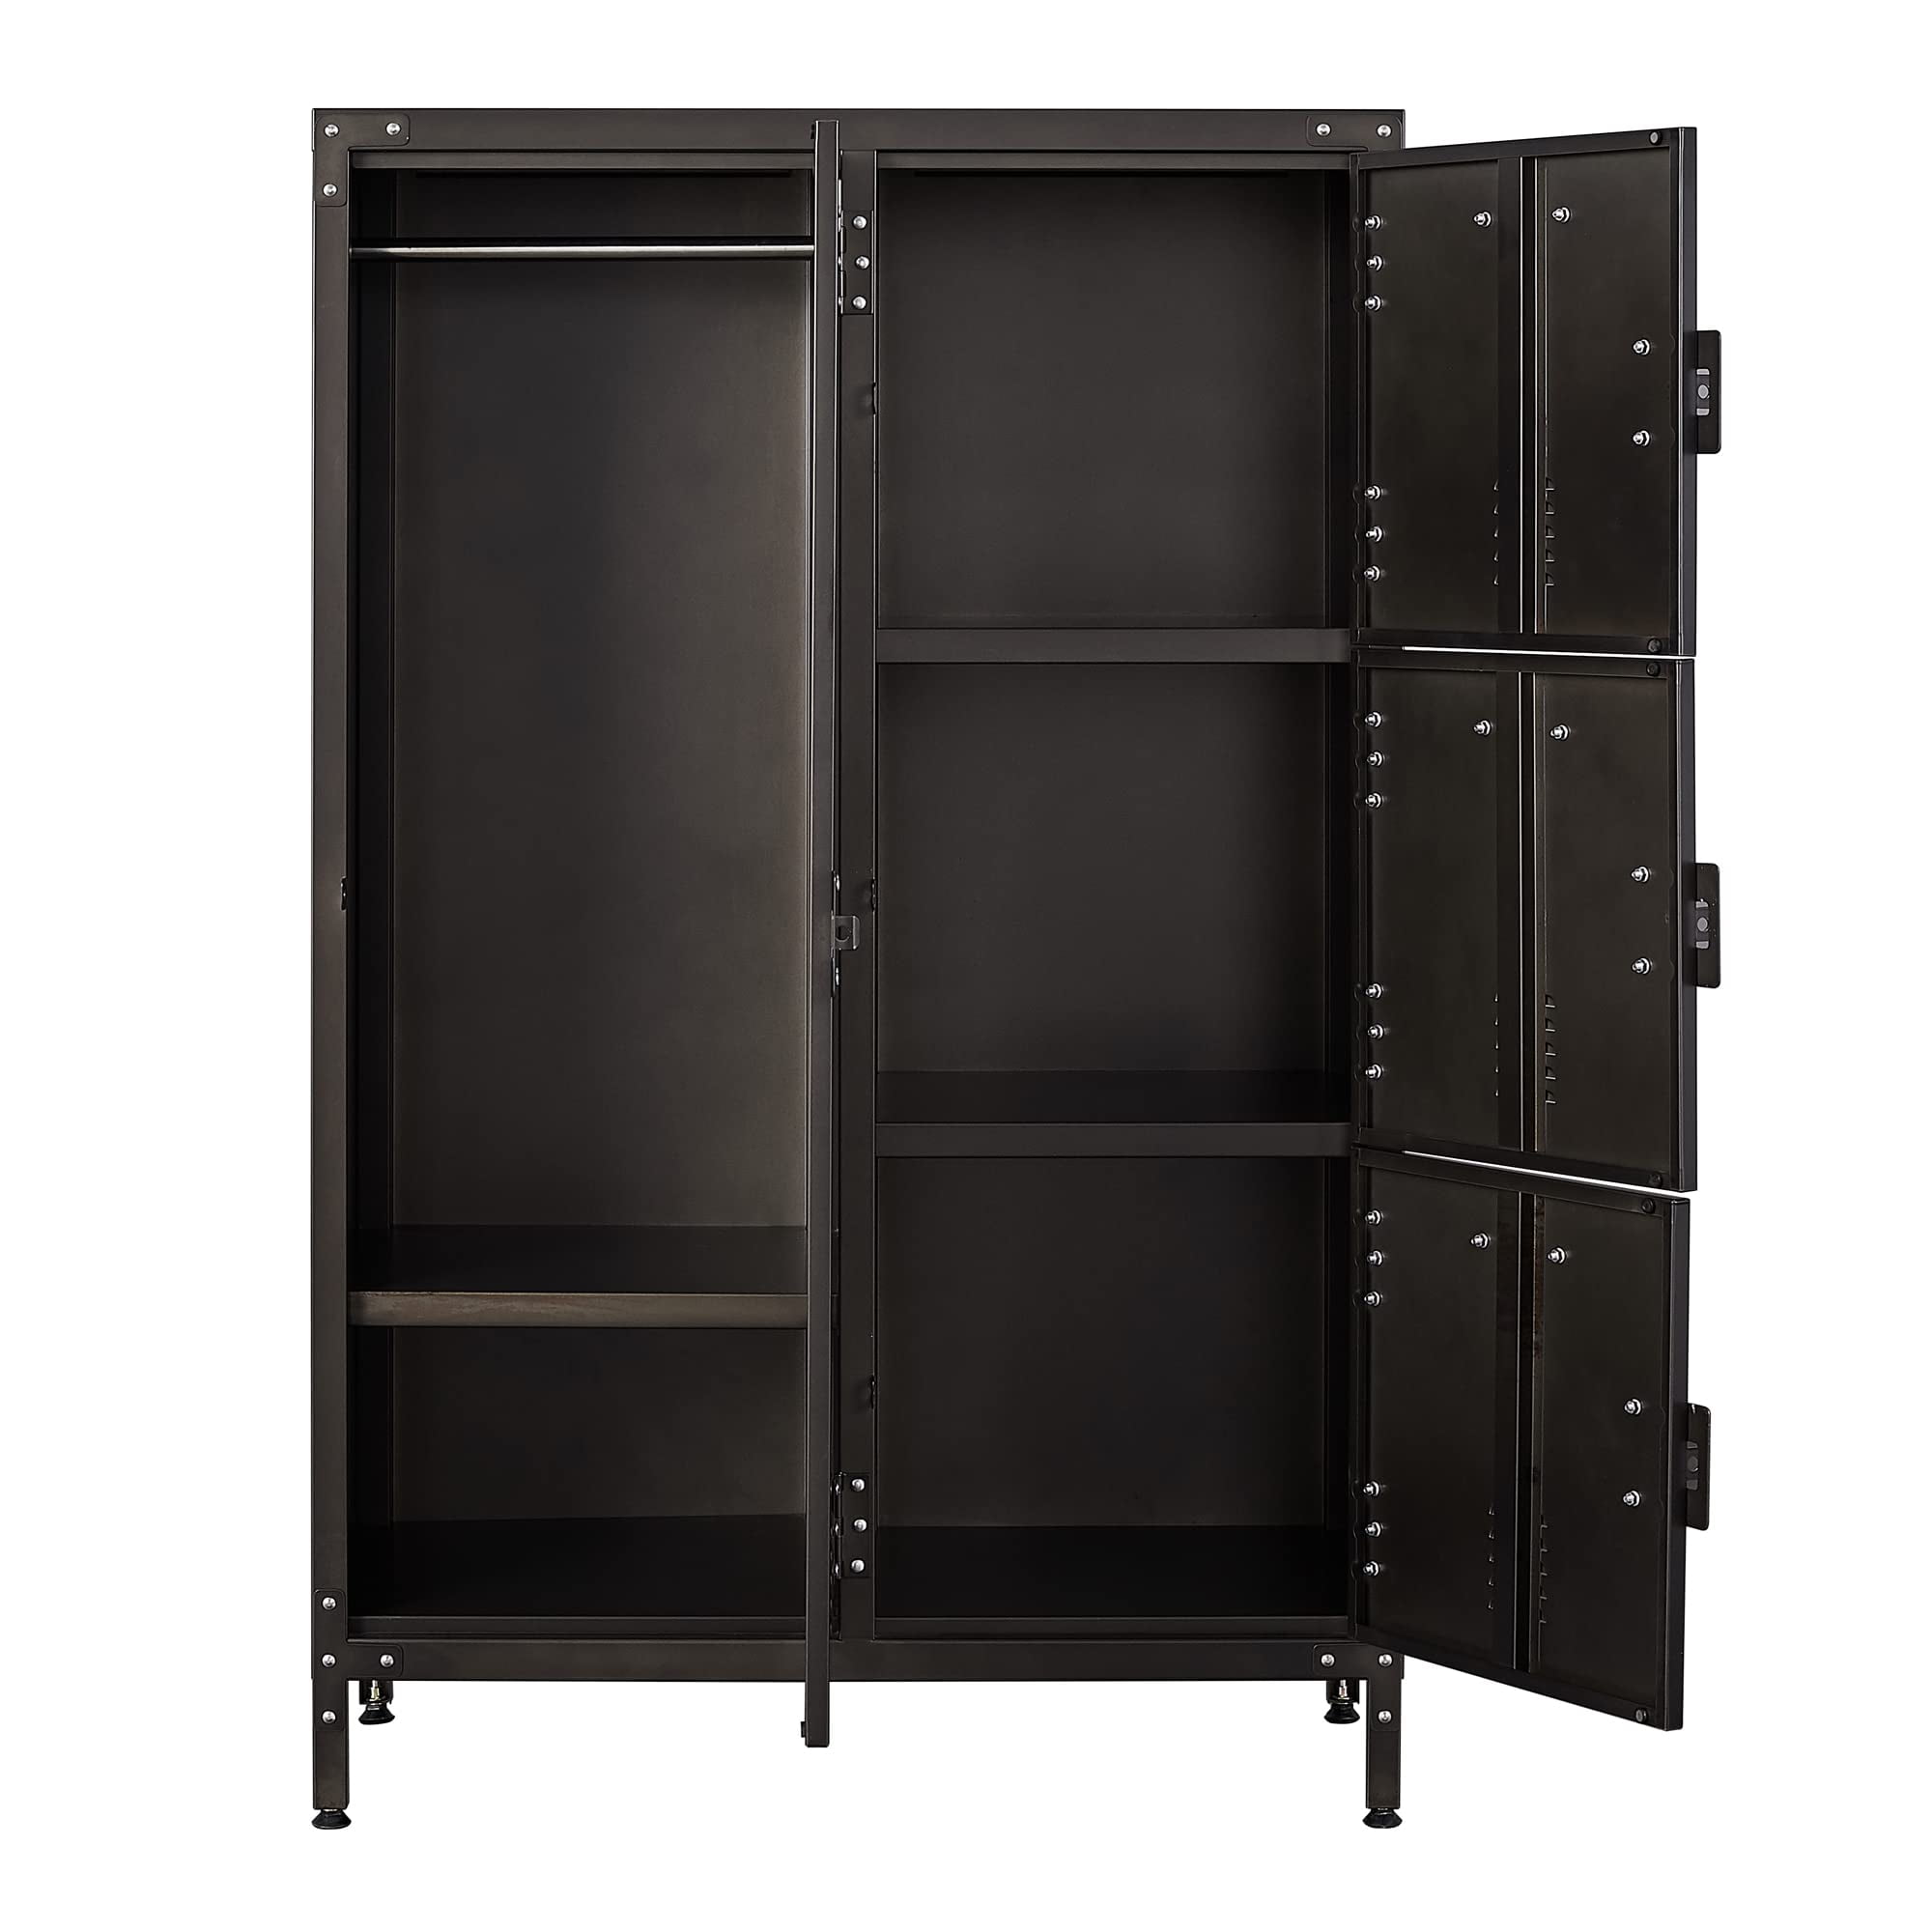 Employee lockers with Keys 9 Door Steel Storage,Metal Locker Storage Cabinet Home Organizer with Lock and Ventilation for Office 